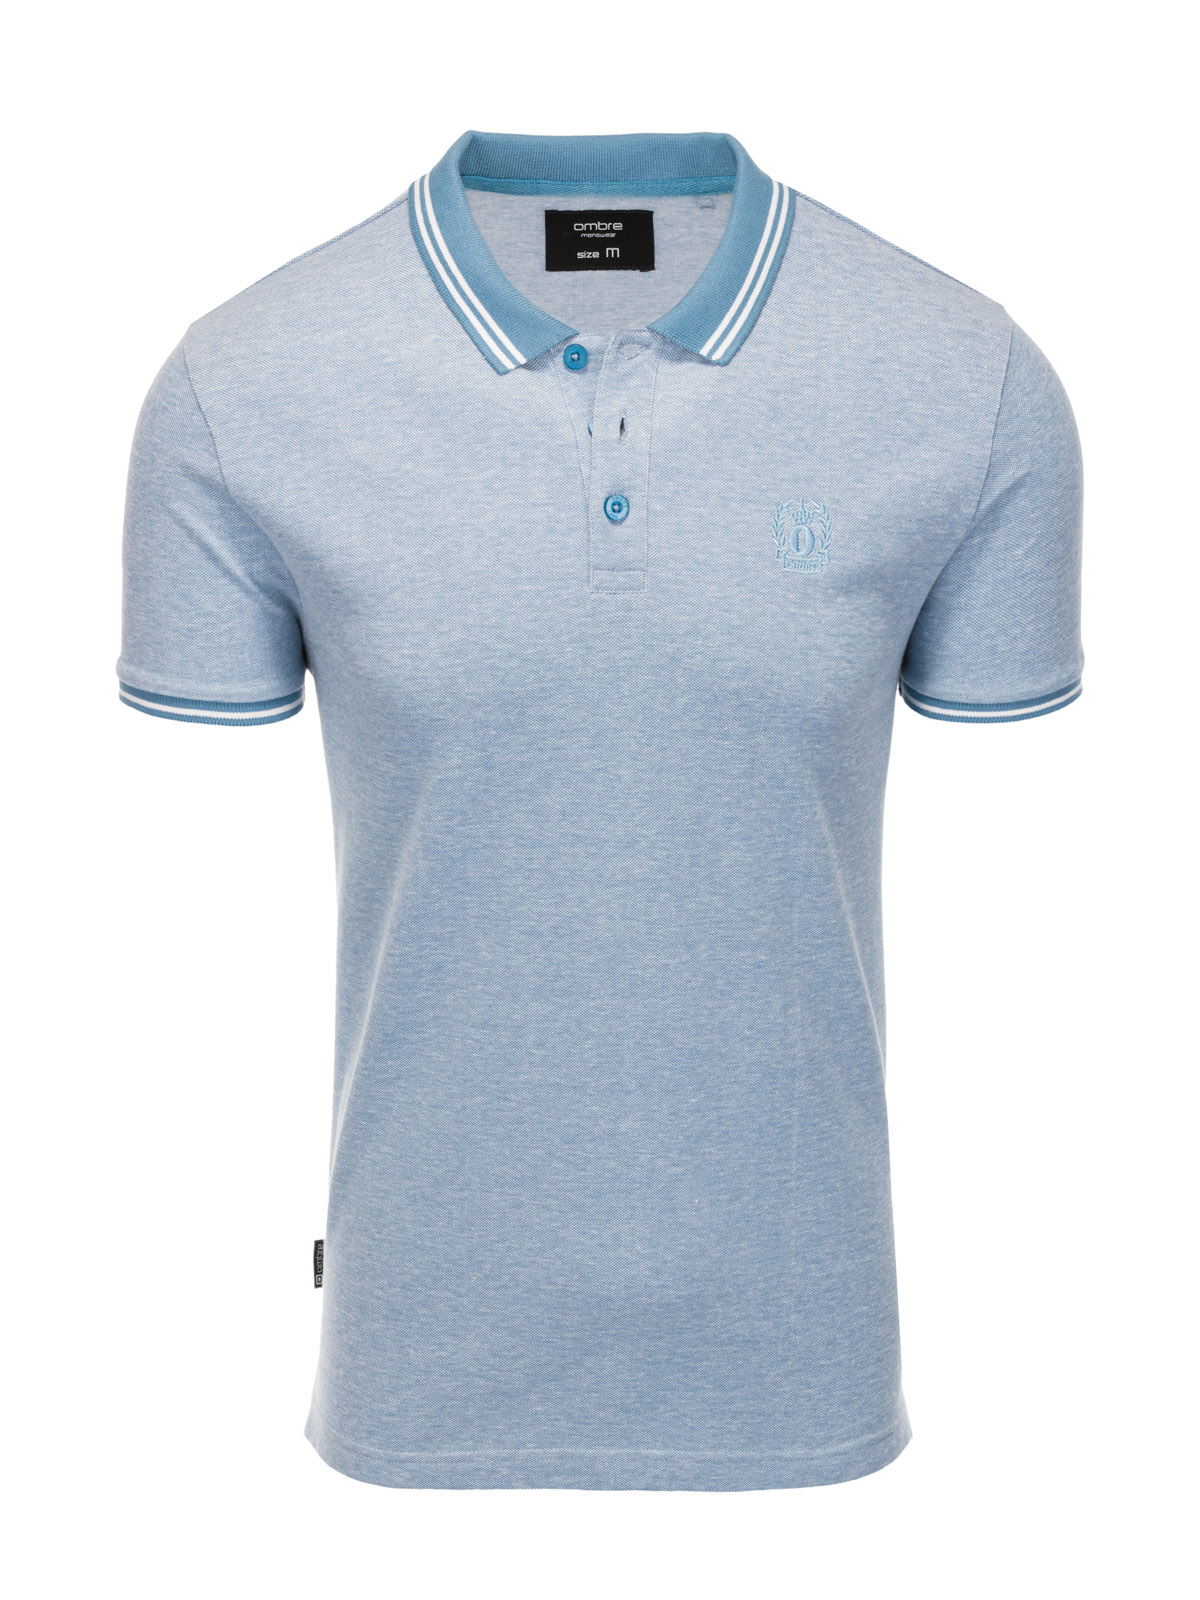 Men's melange polo shirt with contrast collar - blue V3 S1618 | Ombre.com -  Men's clothing online